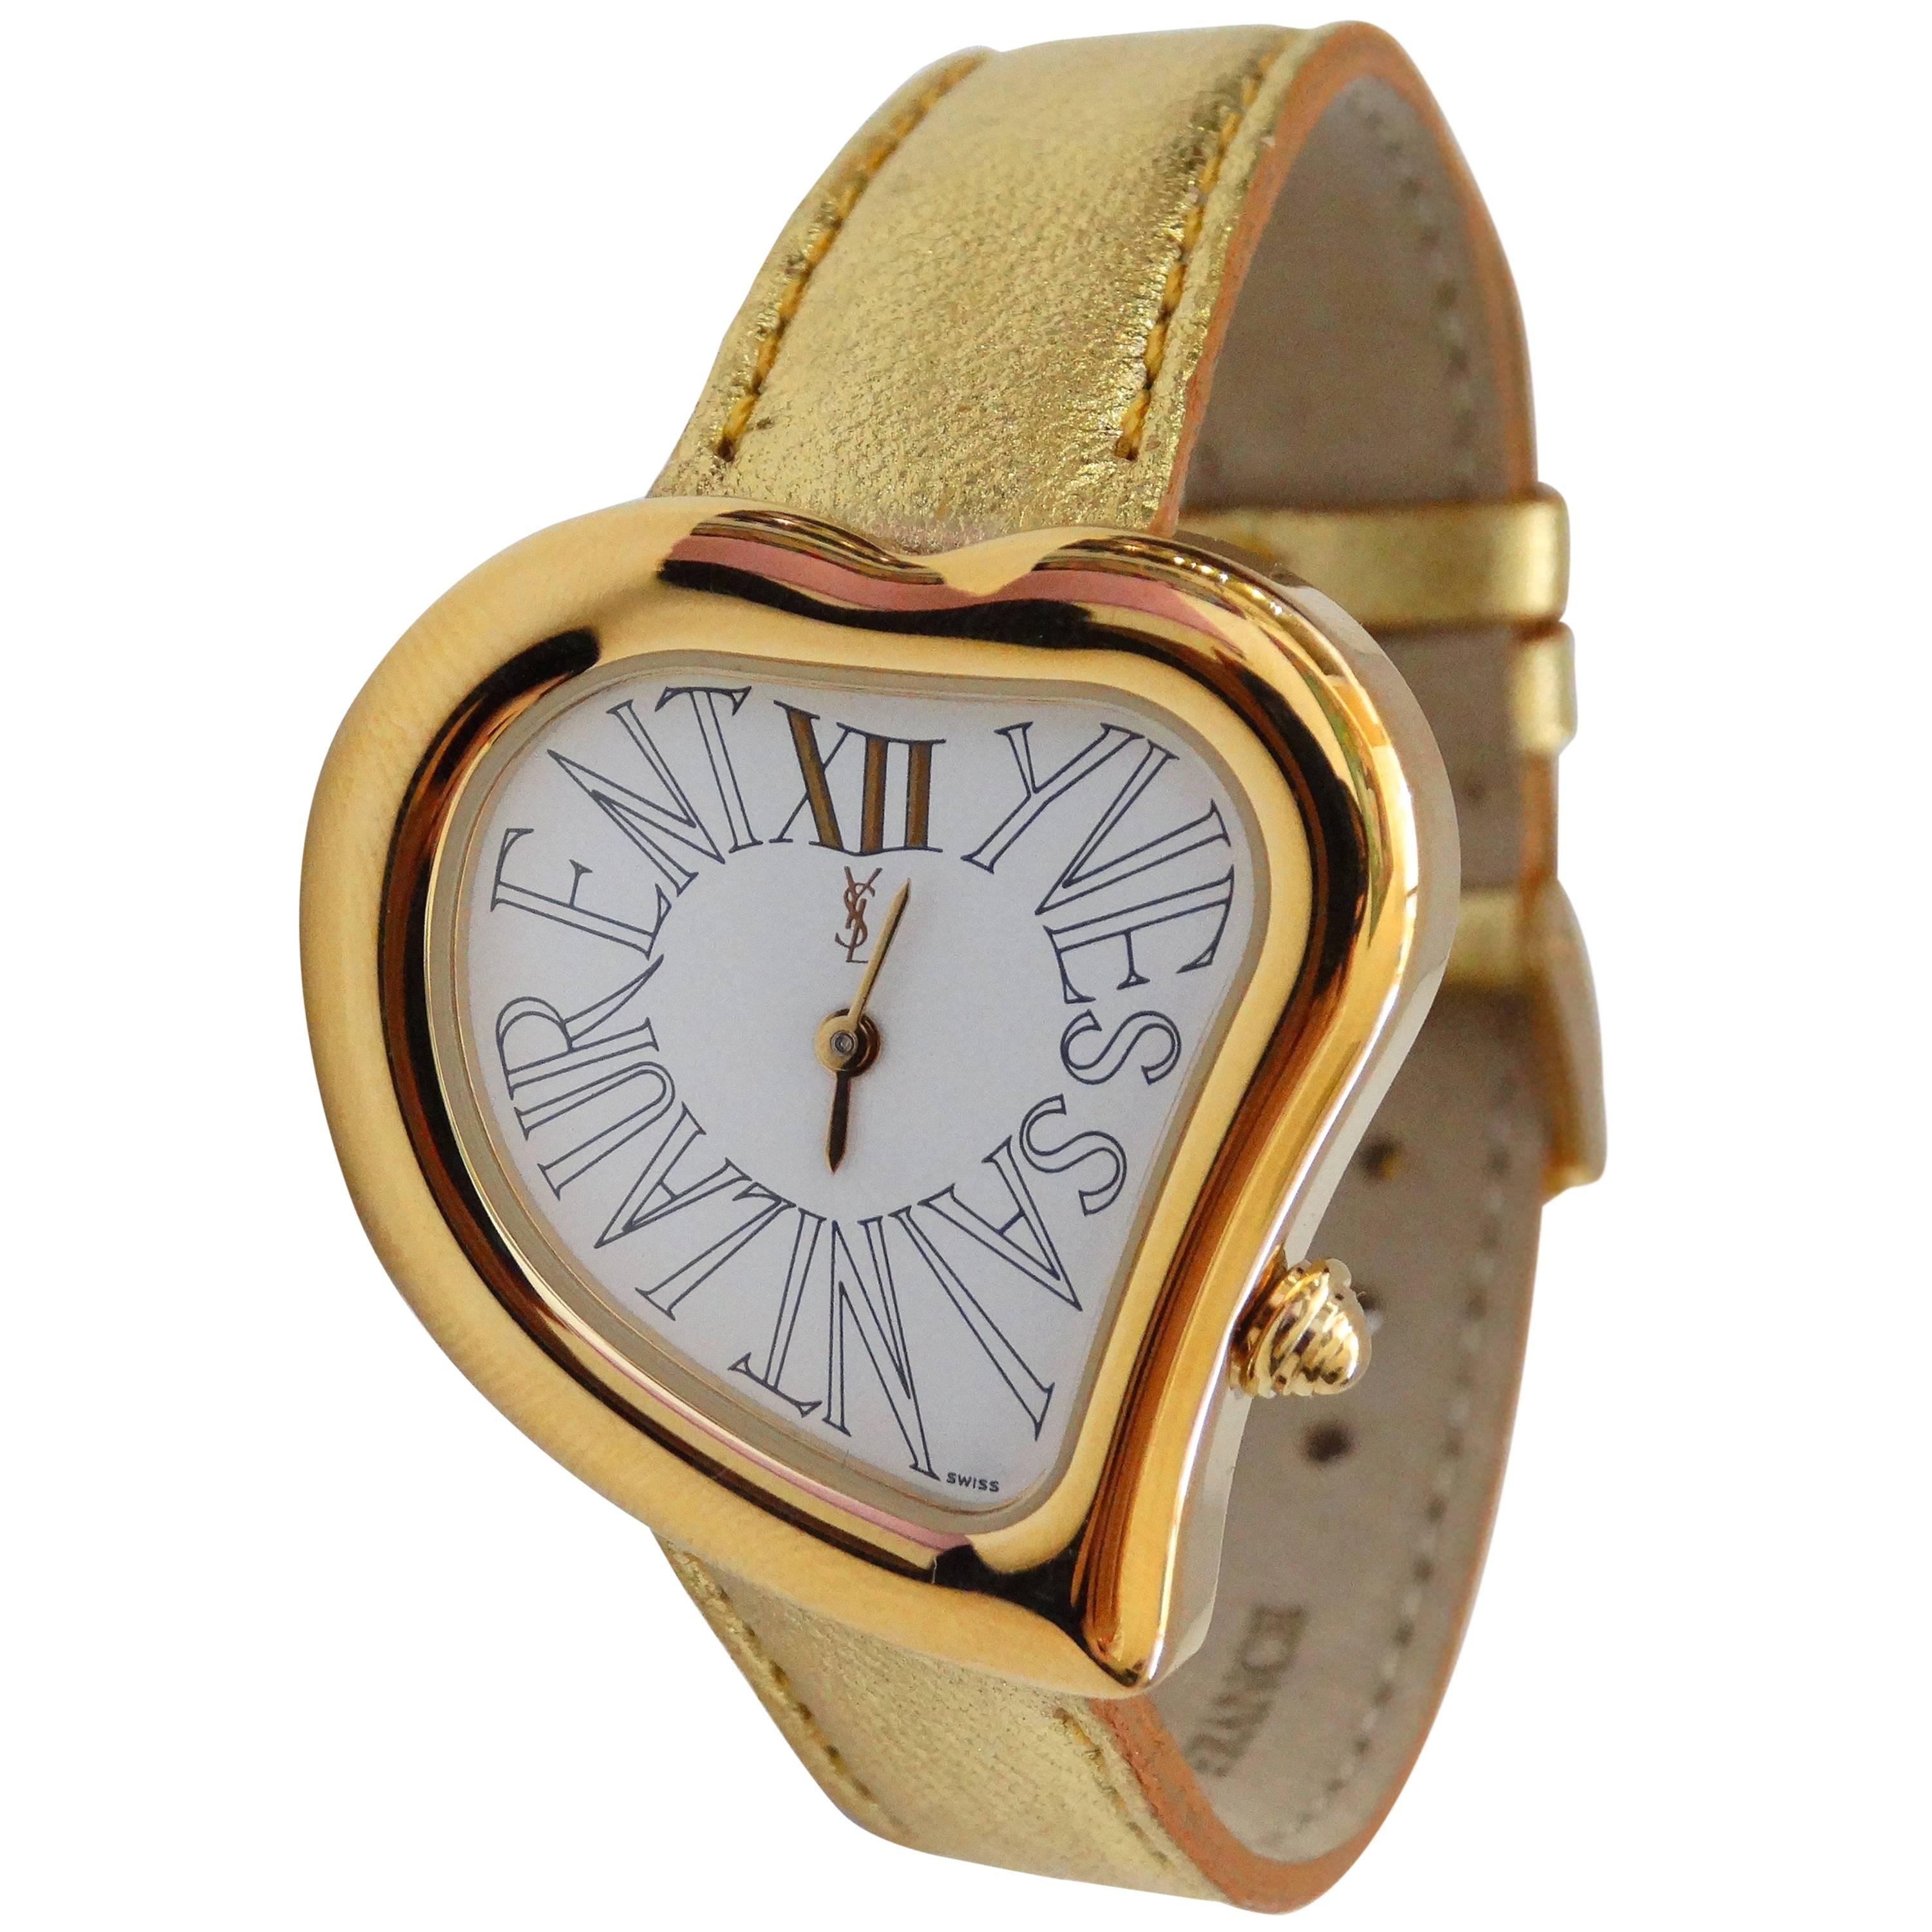 Yves Saint Laurent Heart Shaped Gold Watch, 1980s  